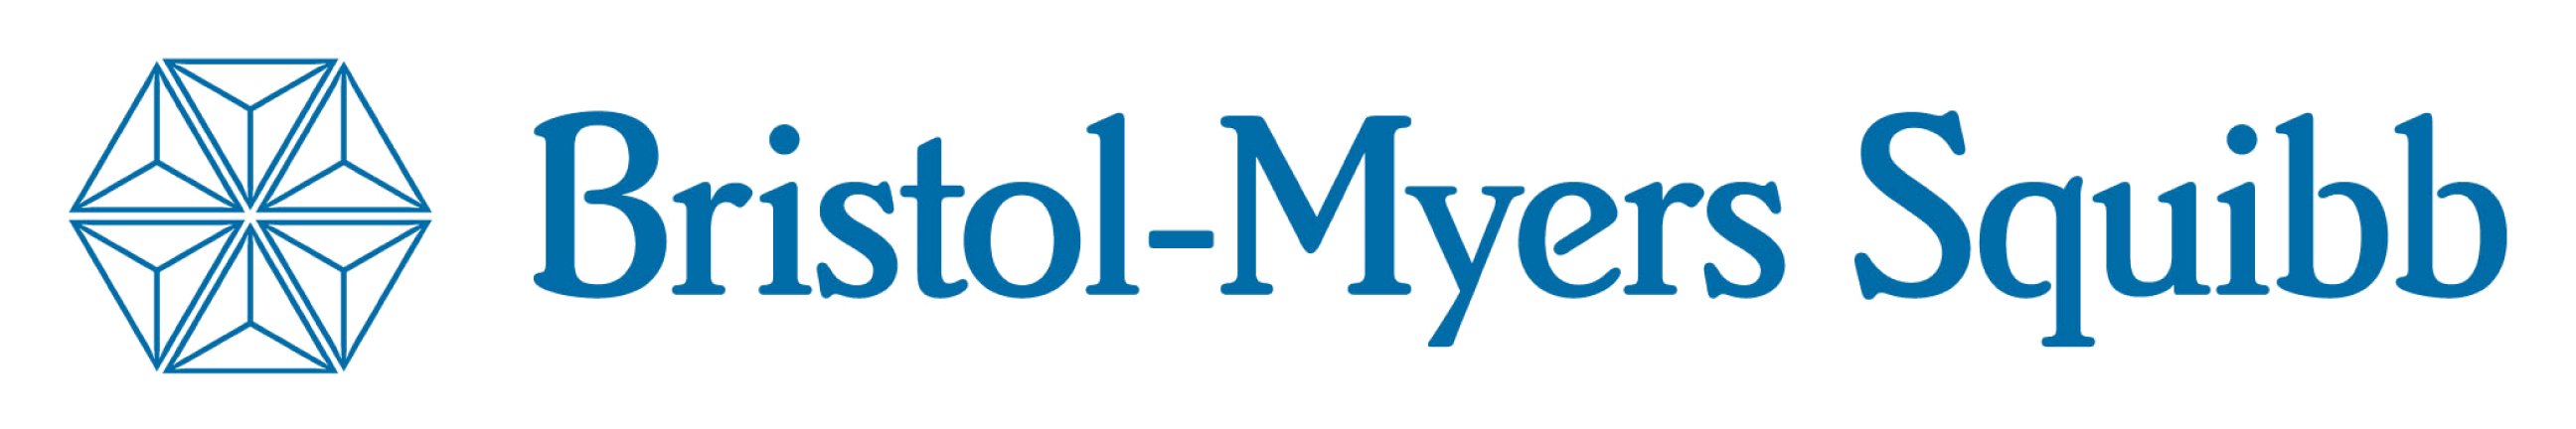 BMS Logo - Bms Logos